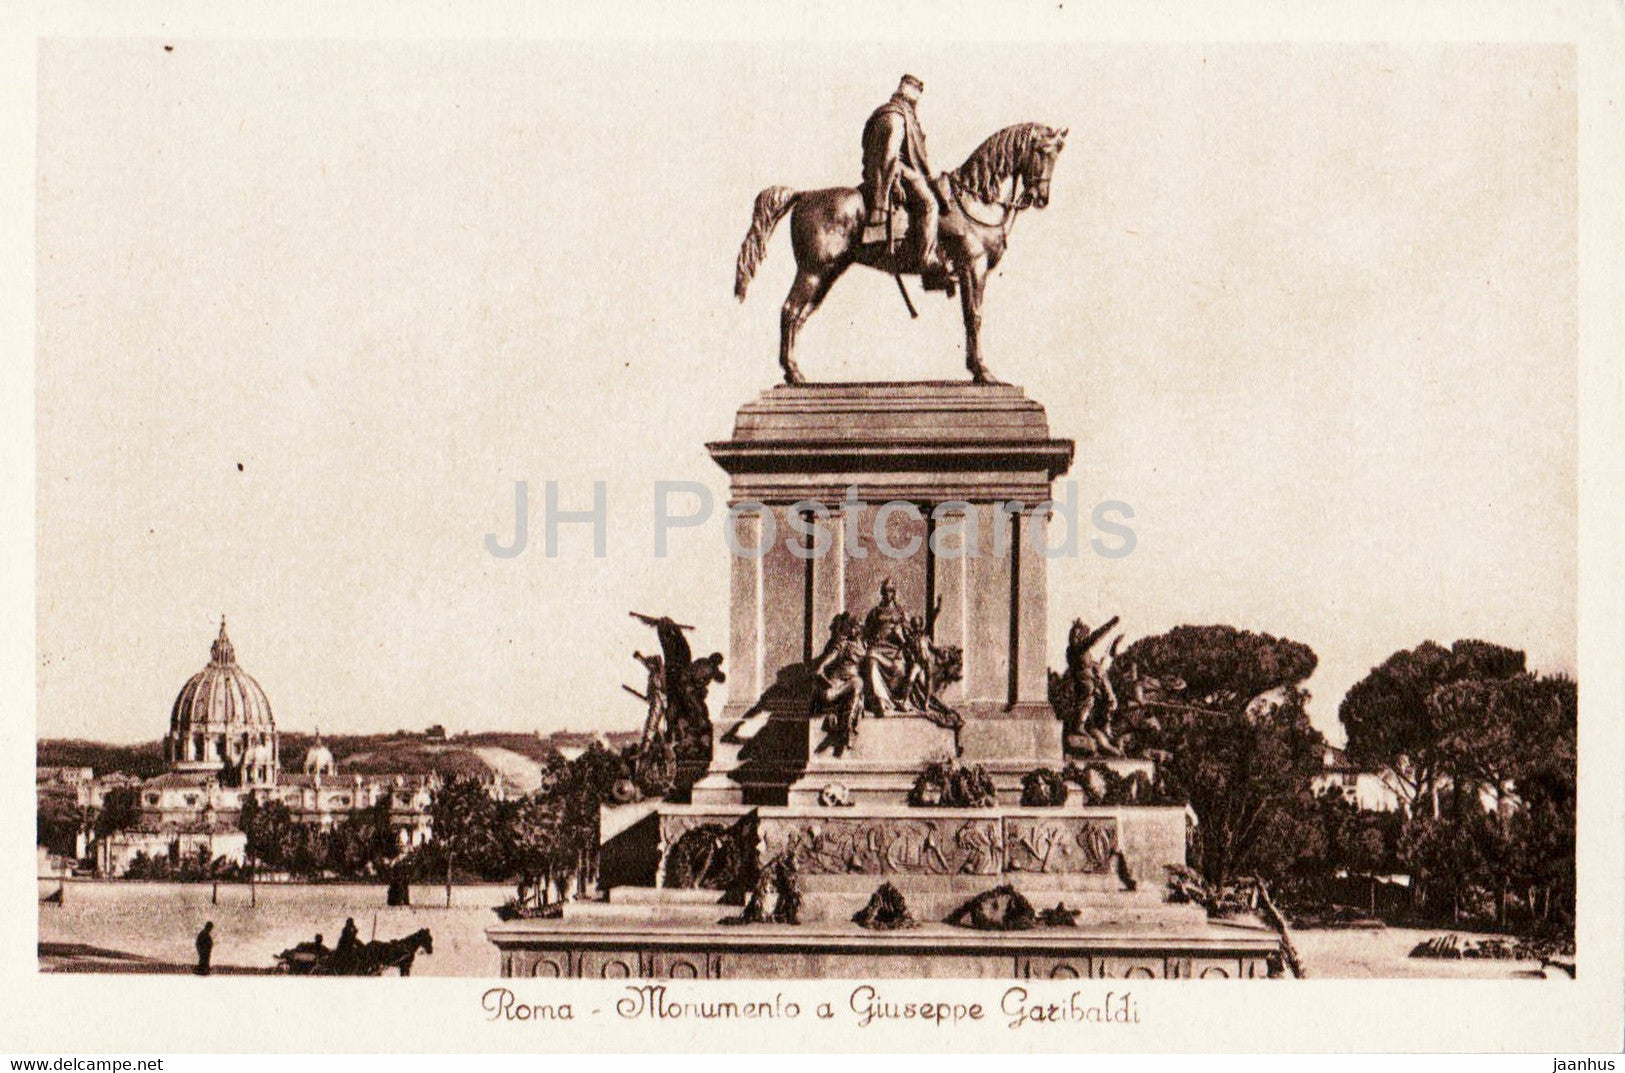 Roma - Rome - Monumento a Giuseppe Garibaldi - horse - monument - 678 - old postcard - Italy - unused - JH Postcards